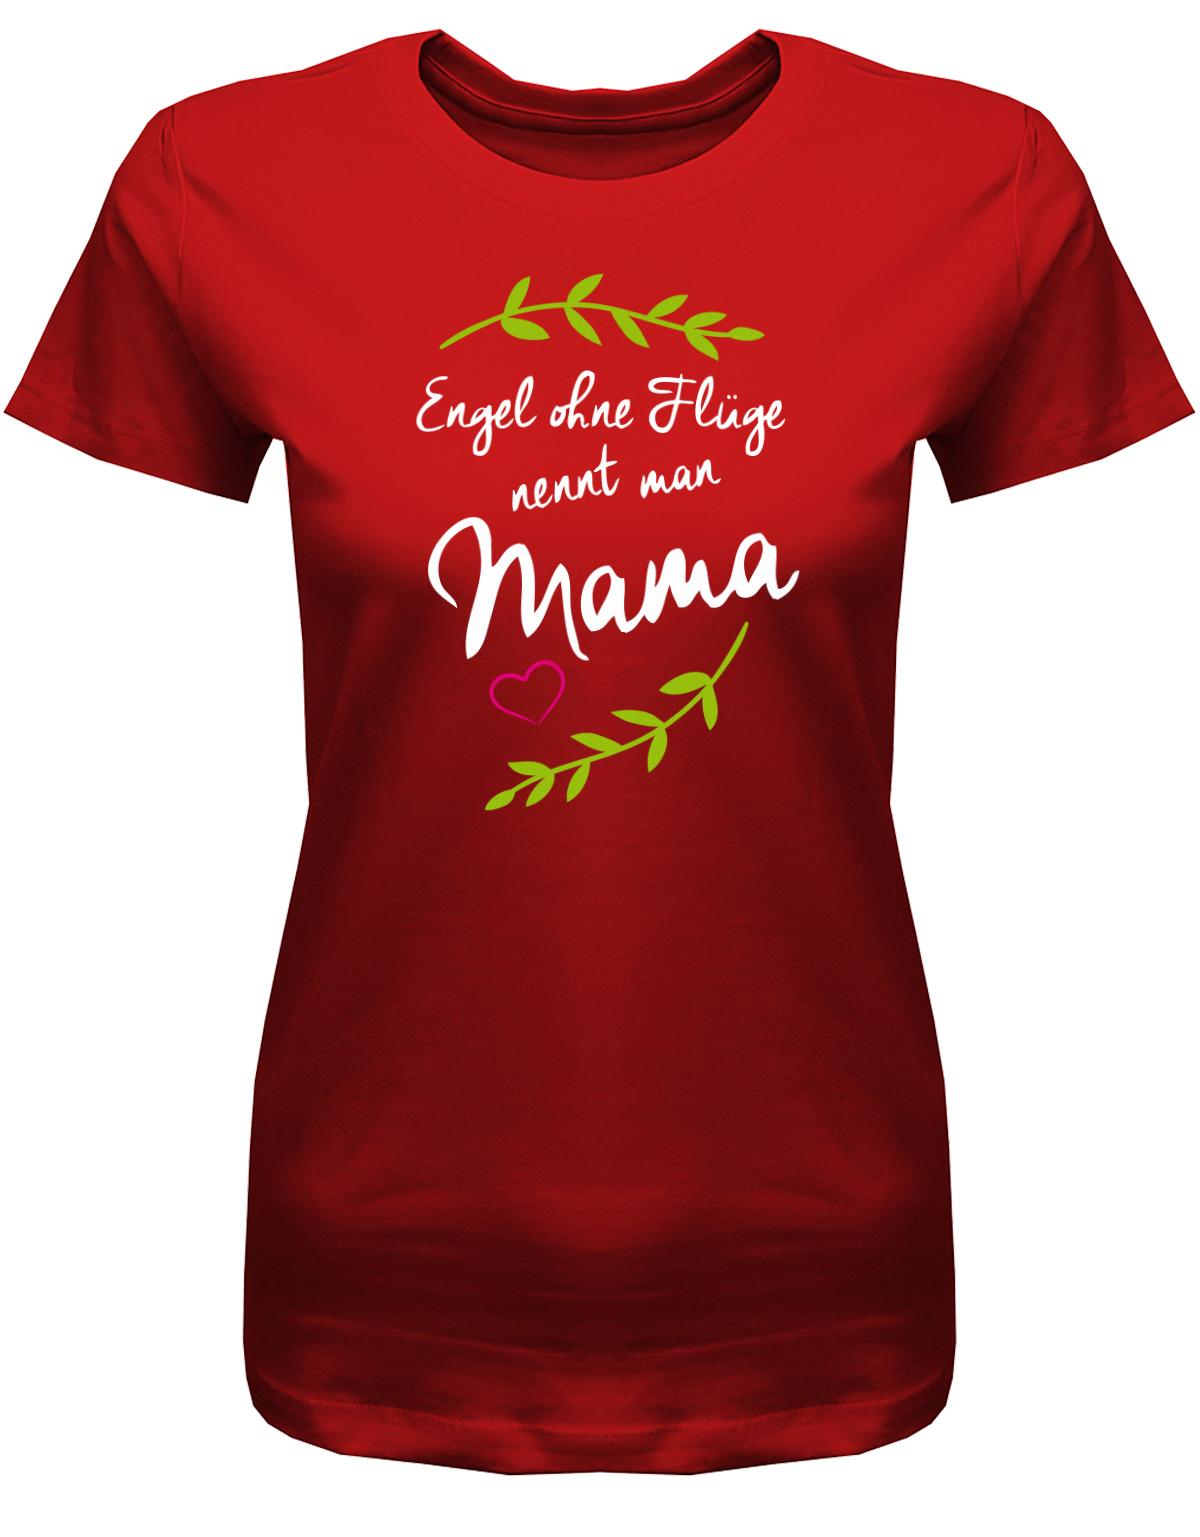 Engel-ohne-Fl-gel-nennt-man-Mama-Damen-Shirt-Rot